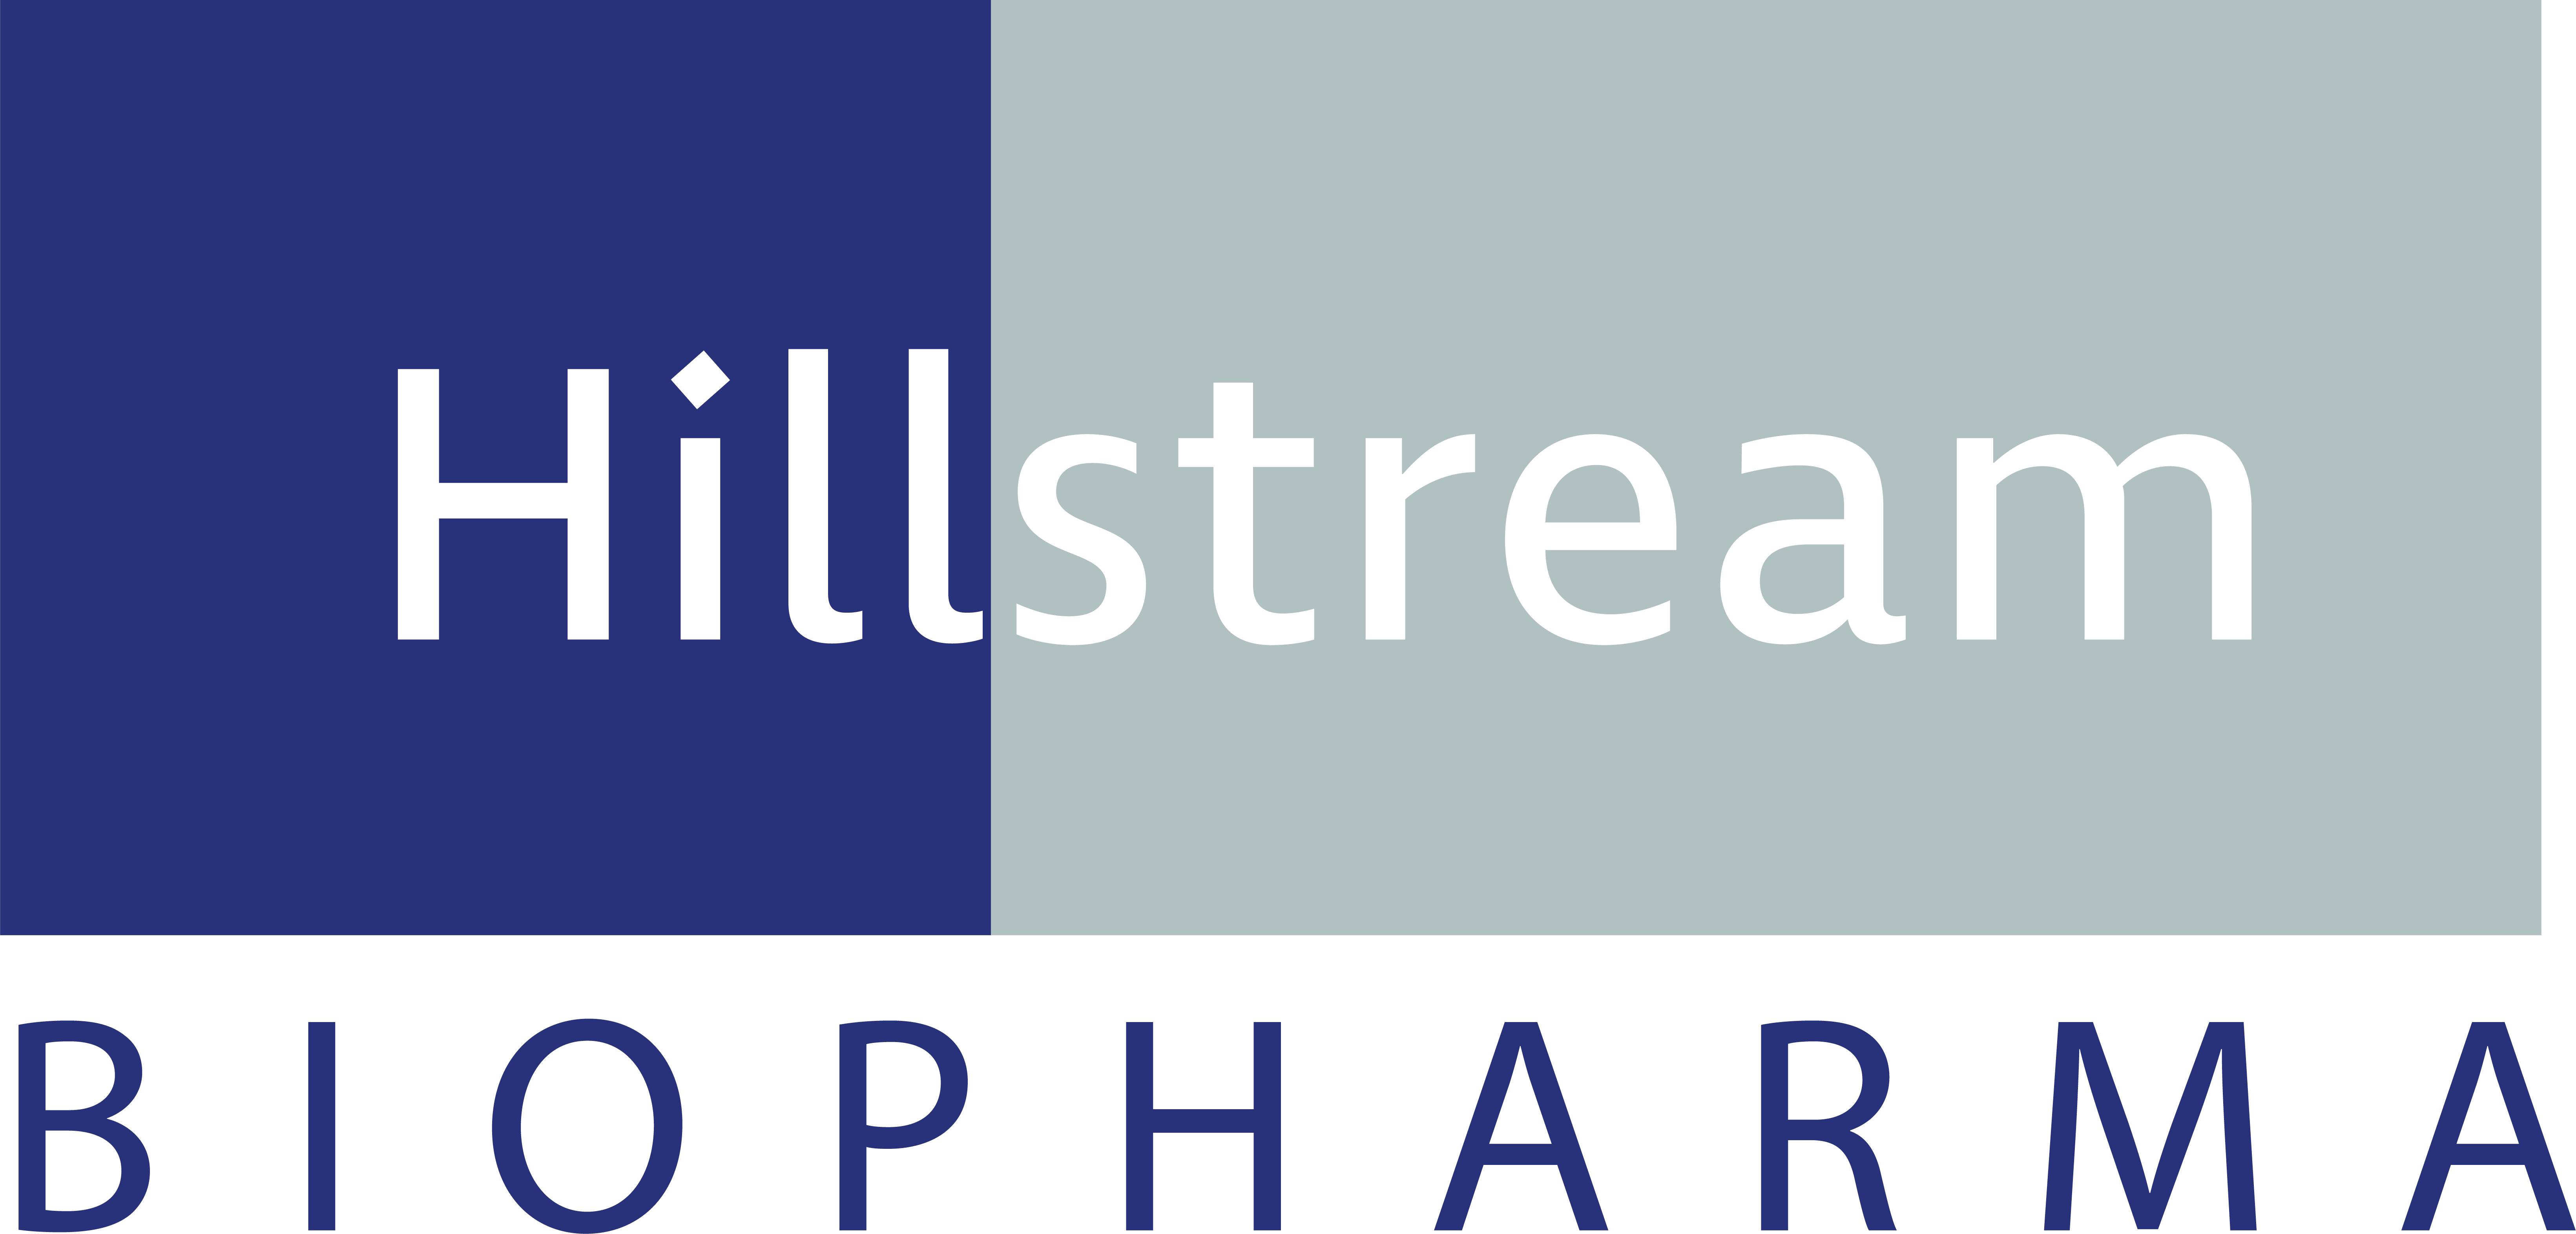 Hillstream Biopharma logo, 06.17.2017.png